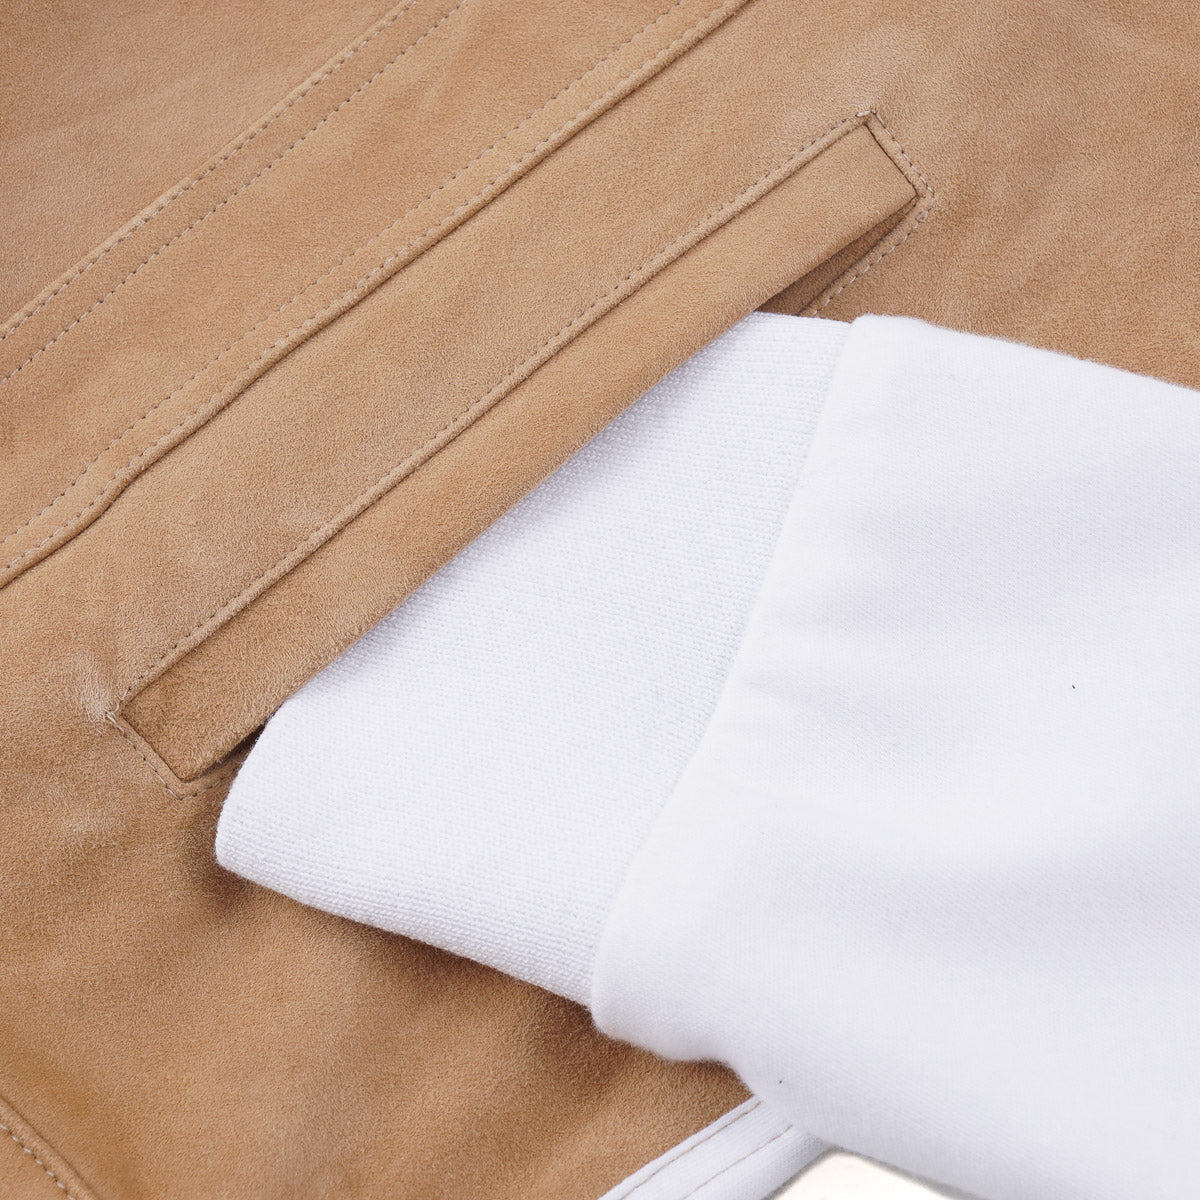 Marco Pescarolo Suede and Jersey Cotton Jacket - Top Shelf Apparel